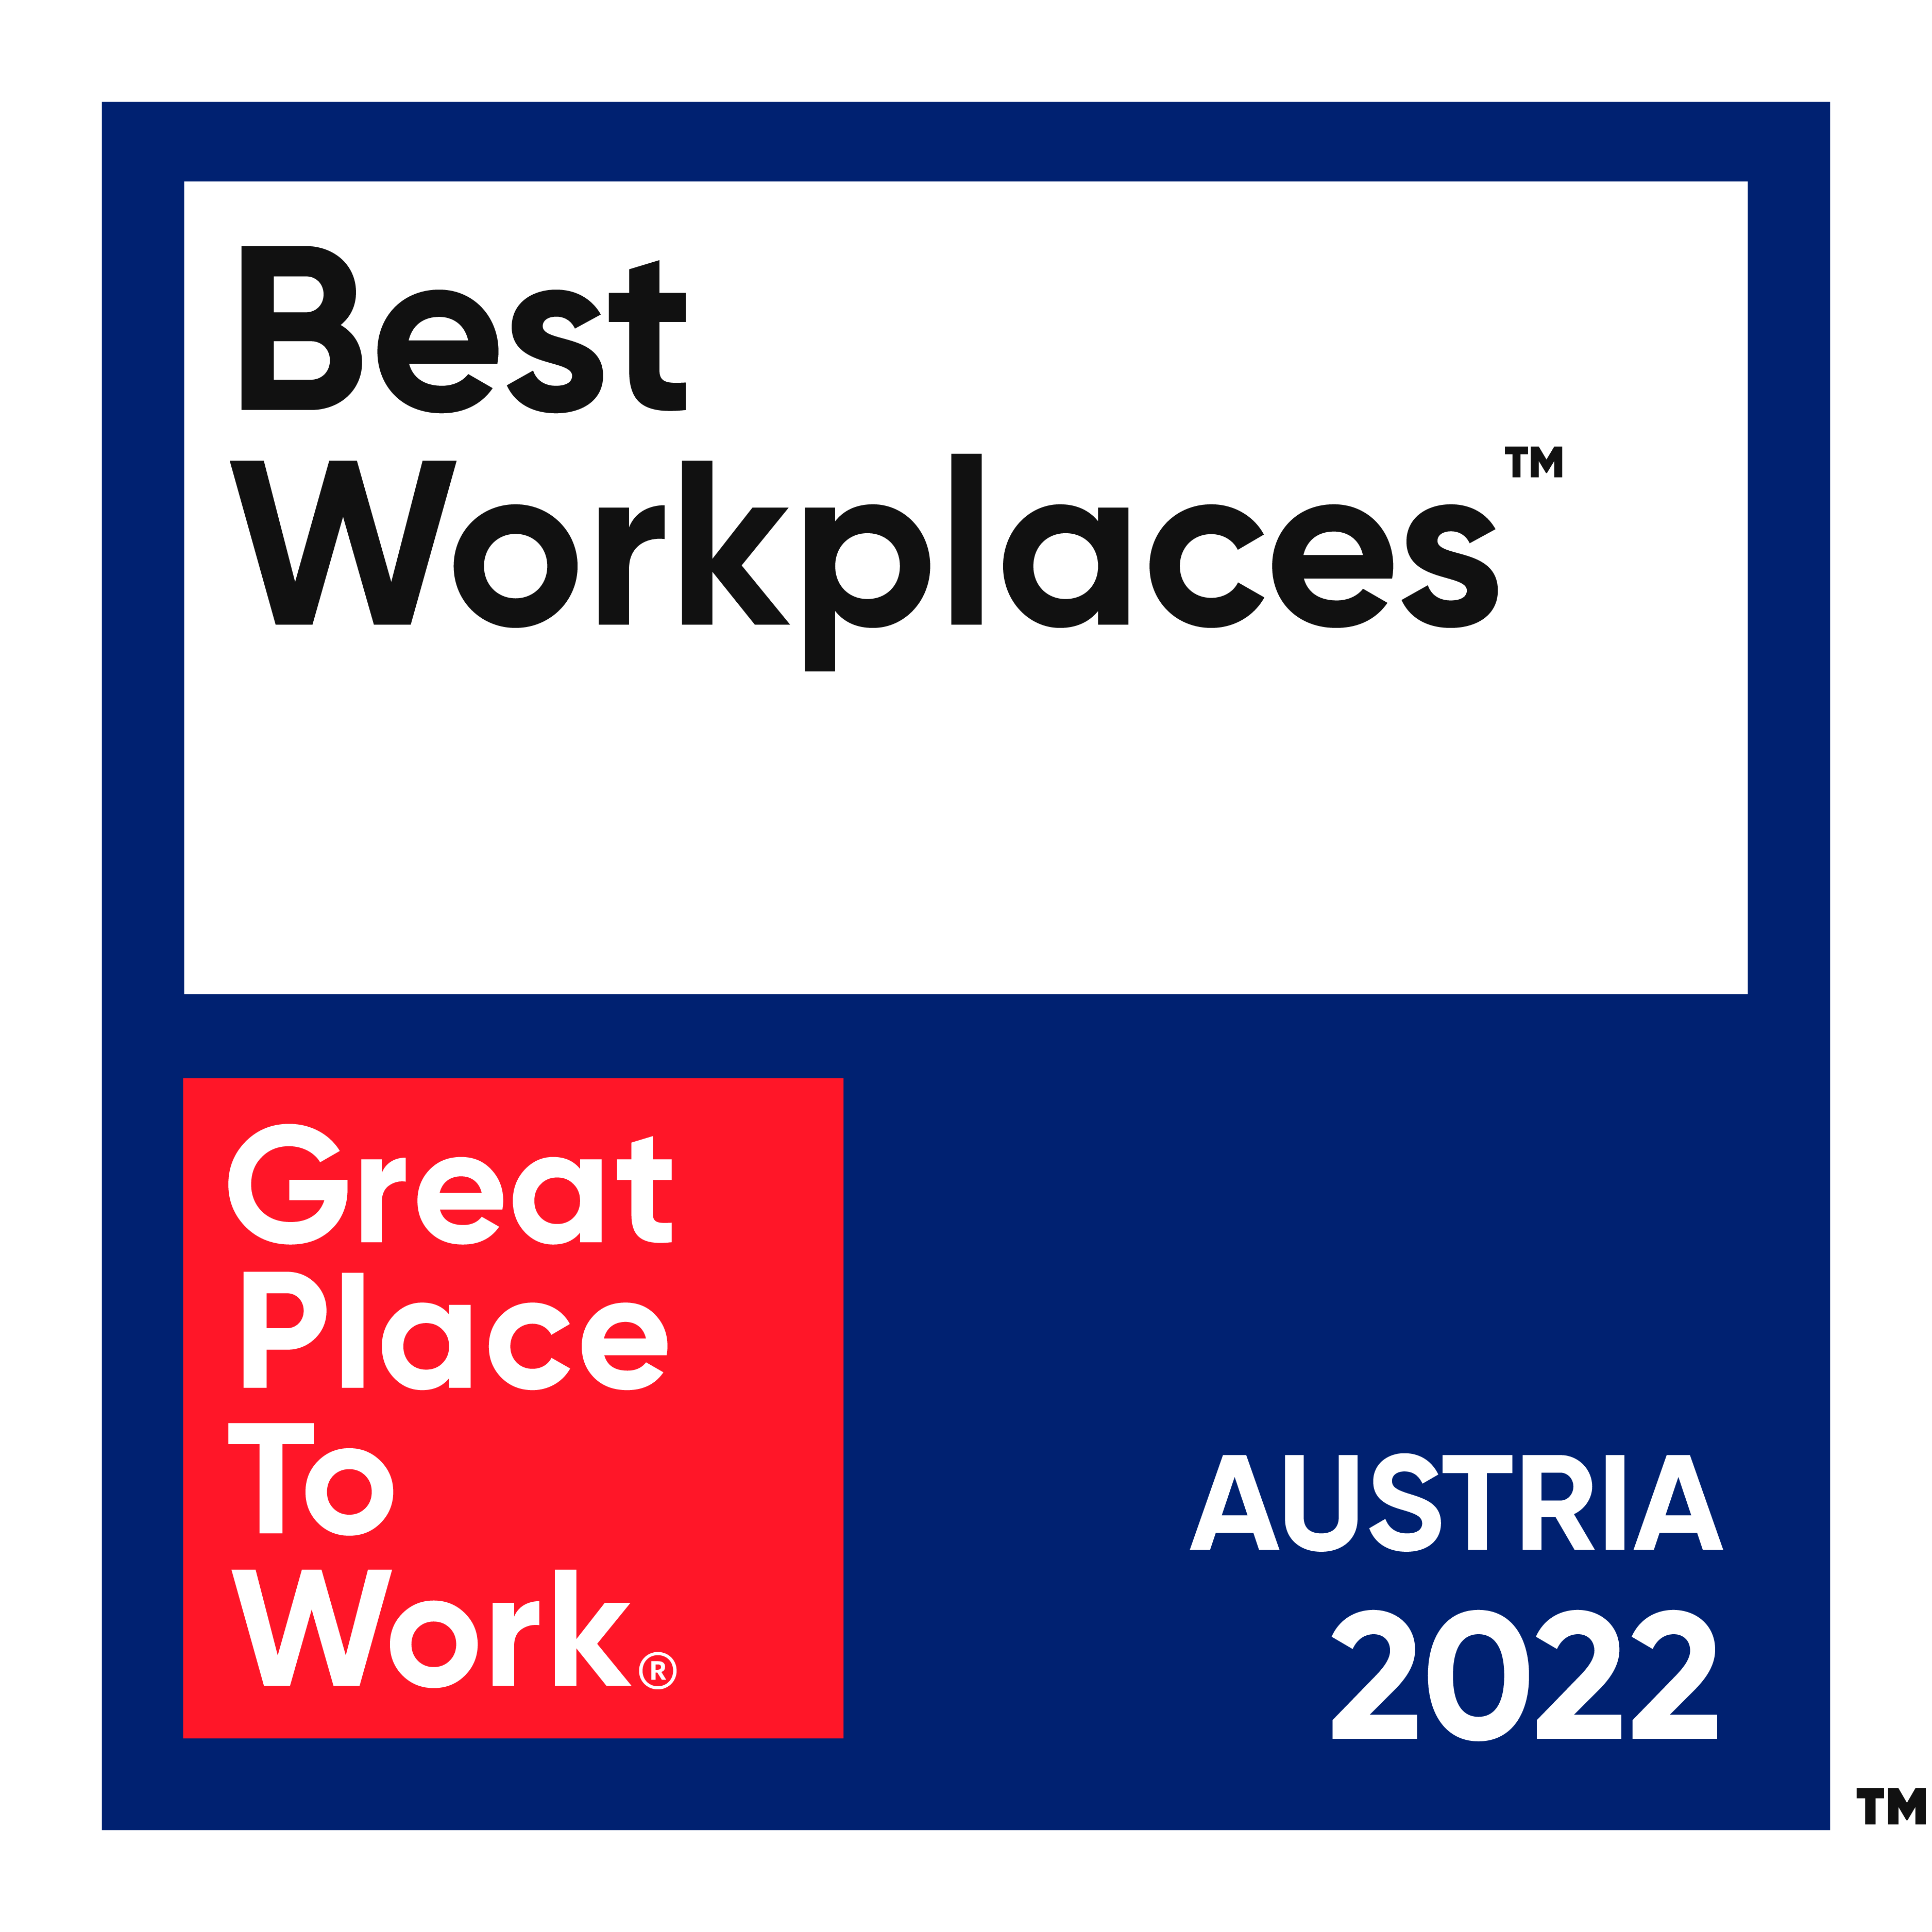 smec badge for Best Workplaces - Austria 2020